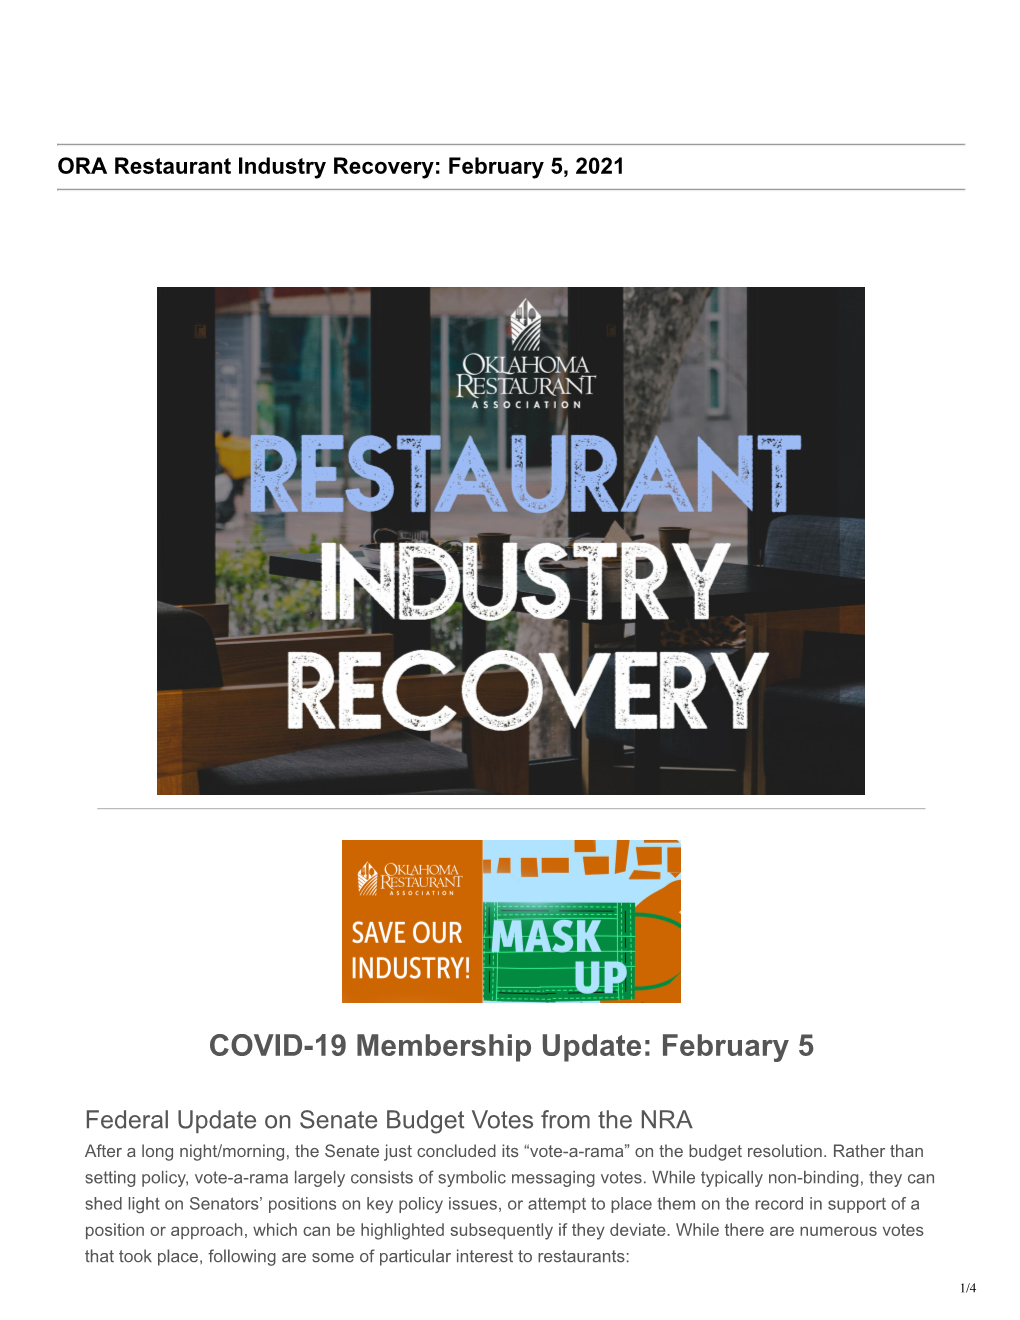 COVID-19 Membership Update: February 5